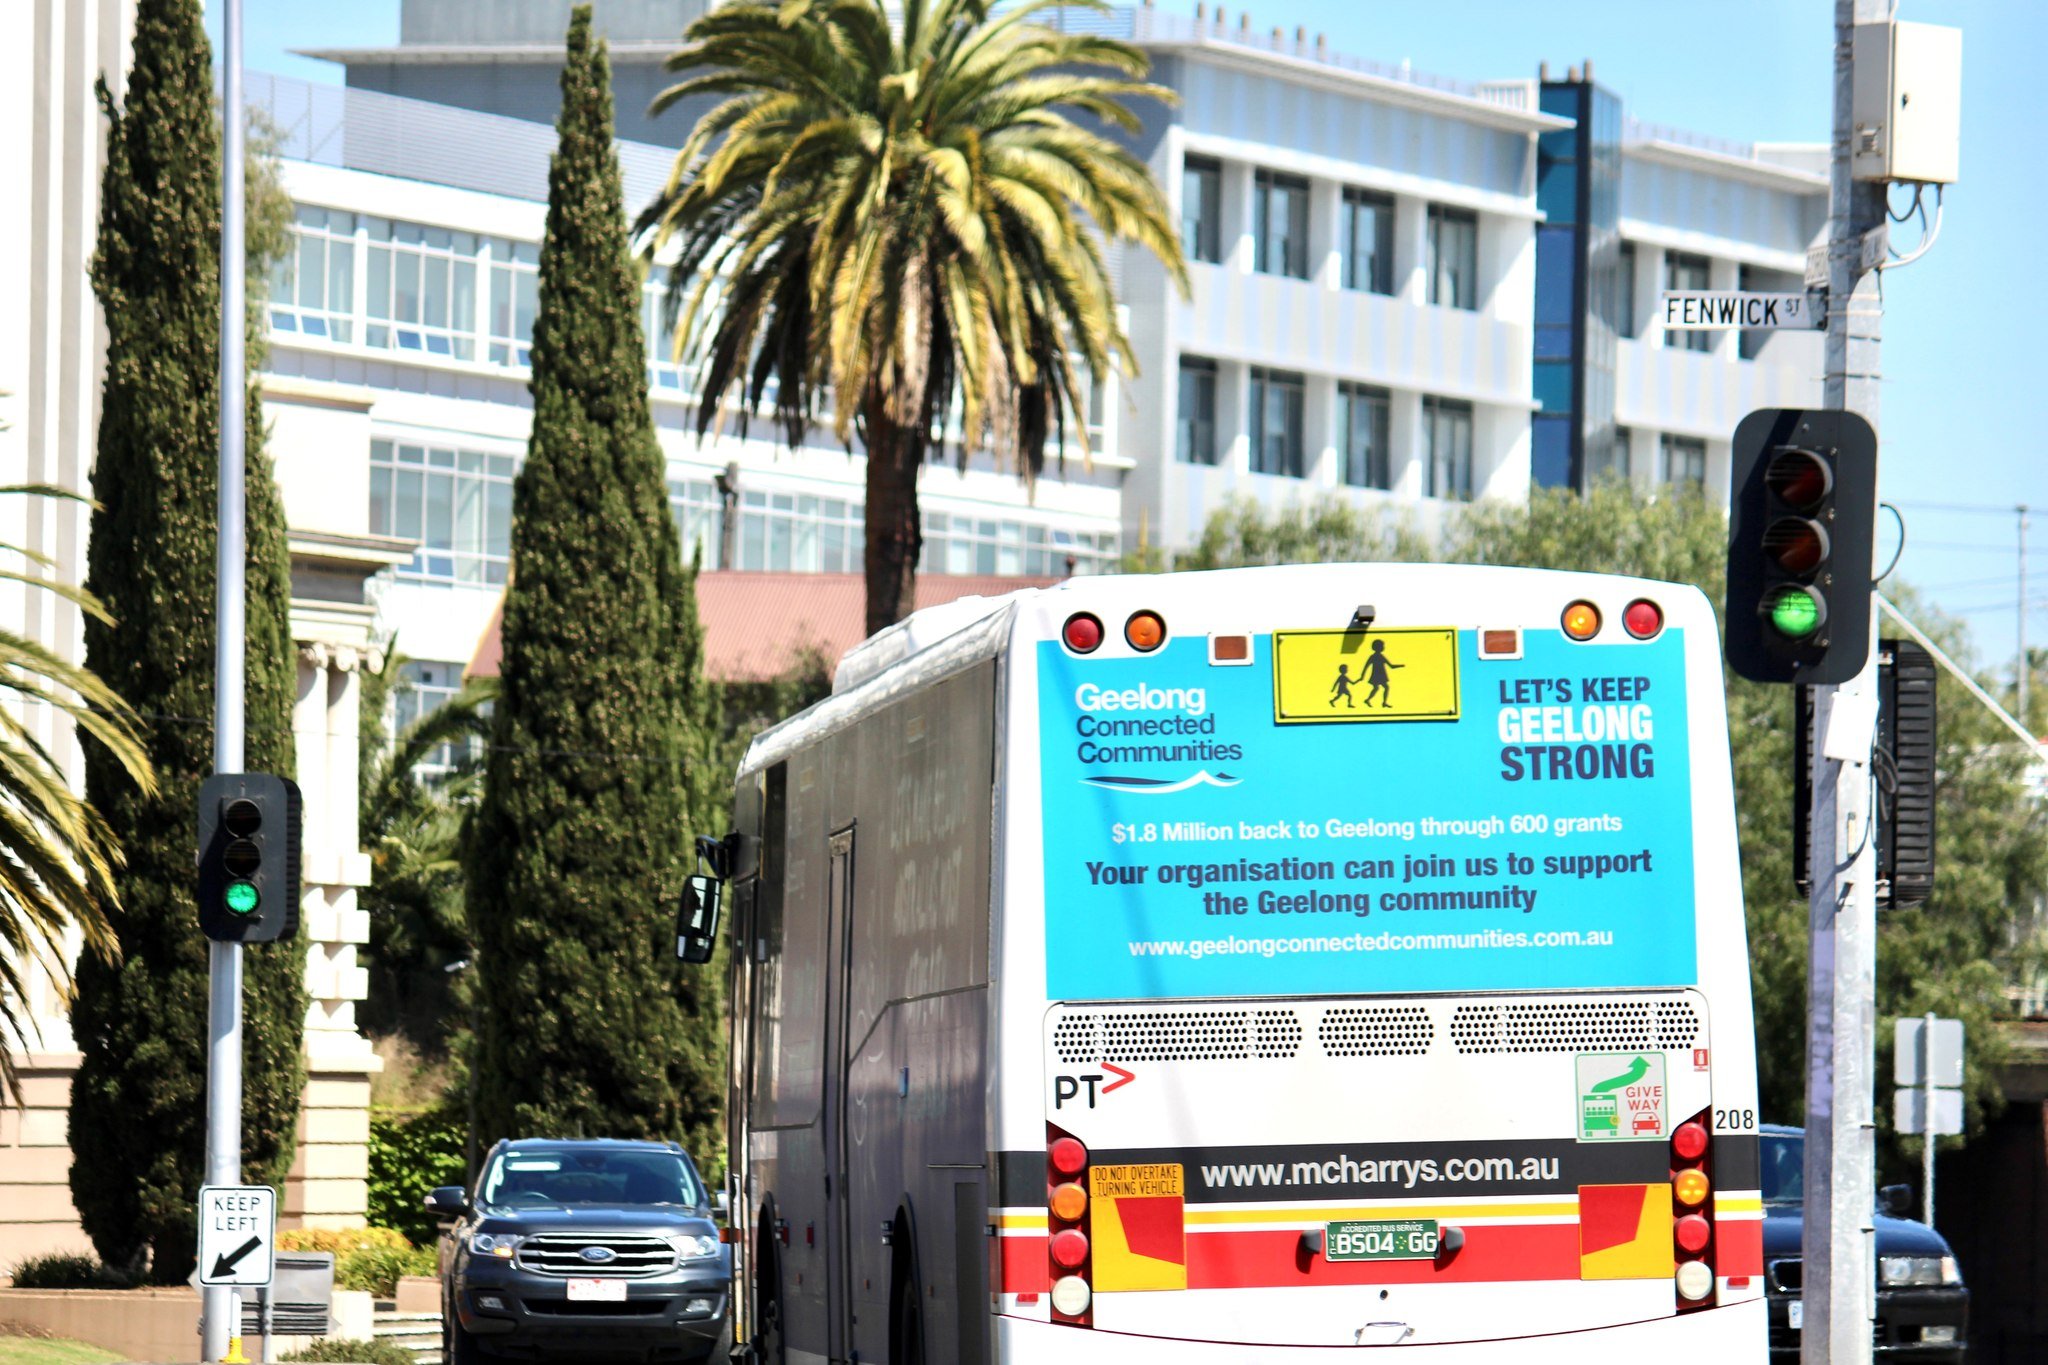 Let's keep Geelong Strong! @geelongconnectedcommunities 

#busbackadvertising #bigbusmedia #outdoormedia #busadvertisinggeelong #advertisinggeelong